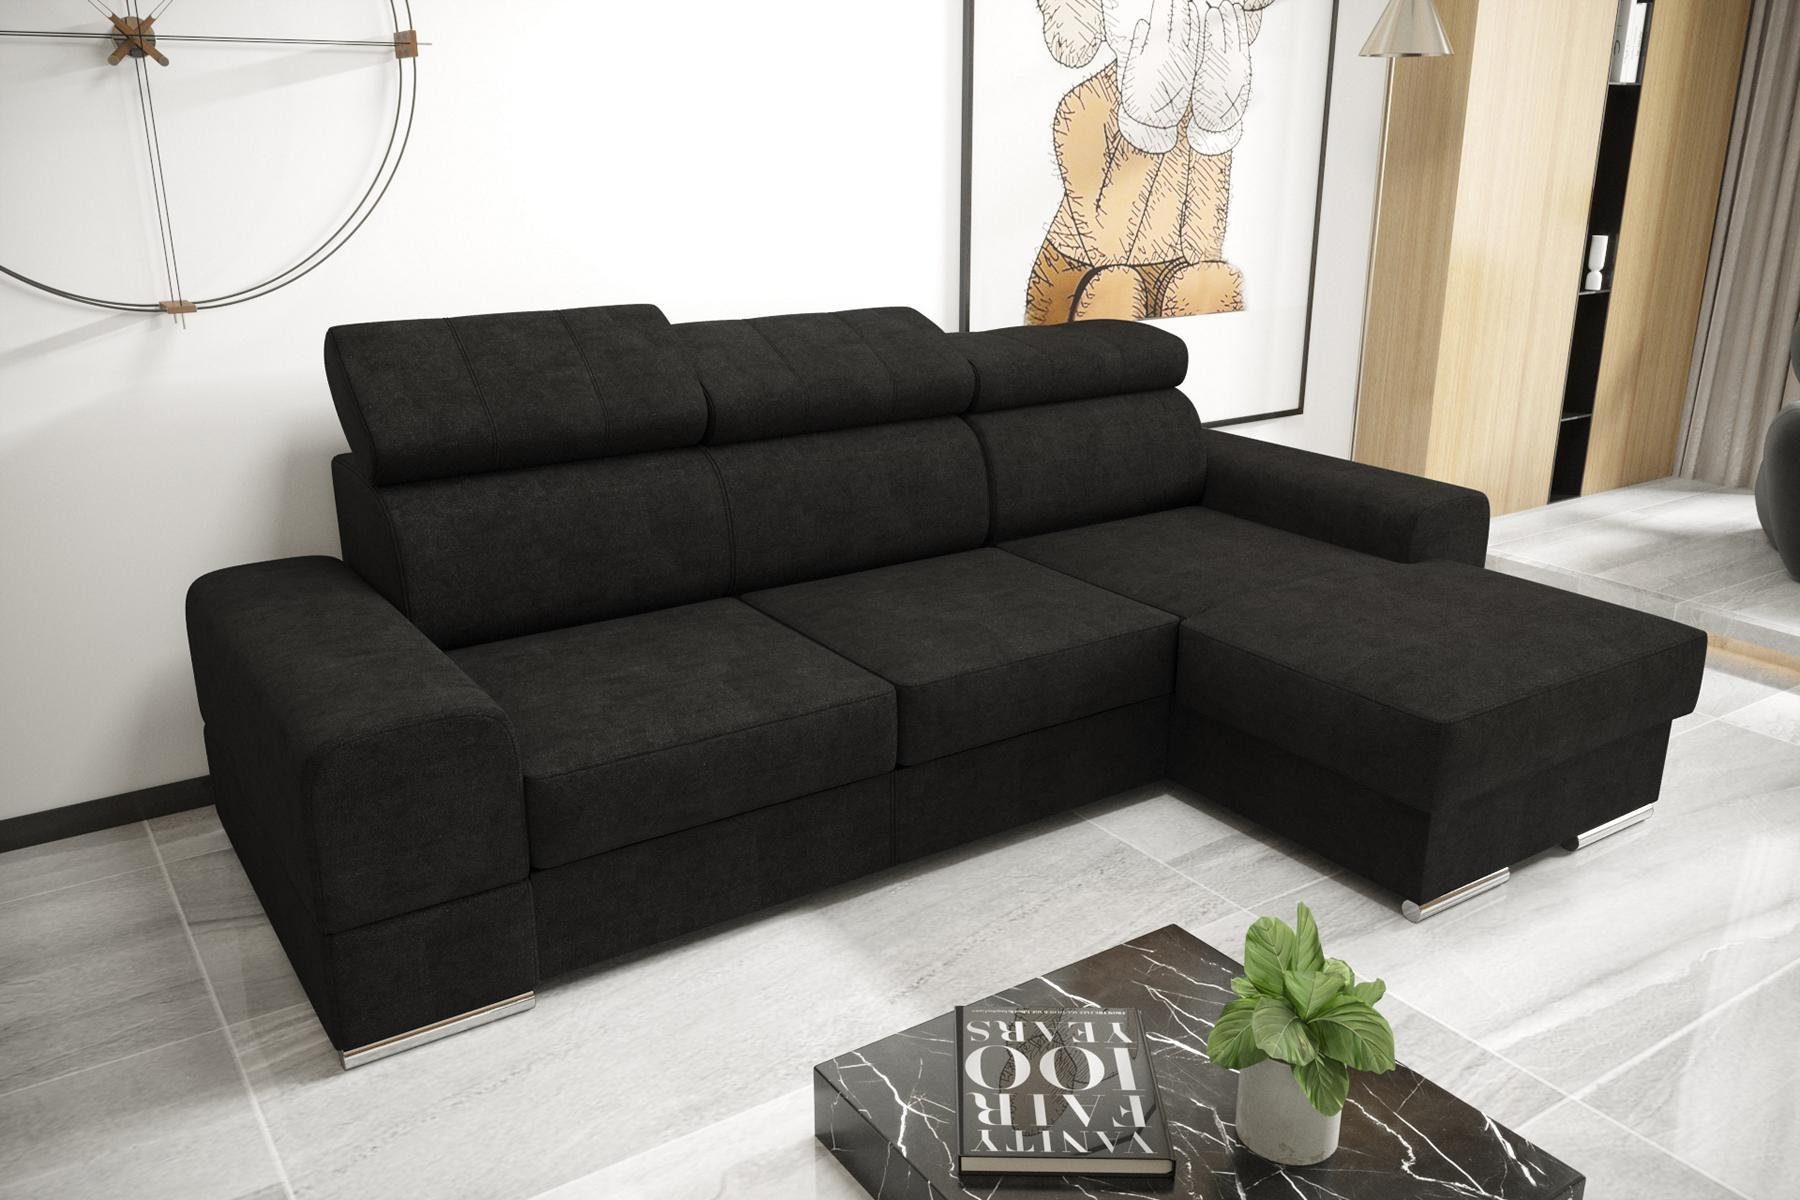 JVmoebel Ecksofa Wohnlandschaft Bettfunktion Stoff Ecksofa L-Form Sofa Couch, Made in Europe Schwarz